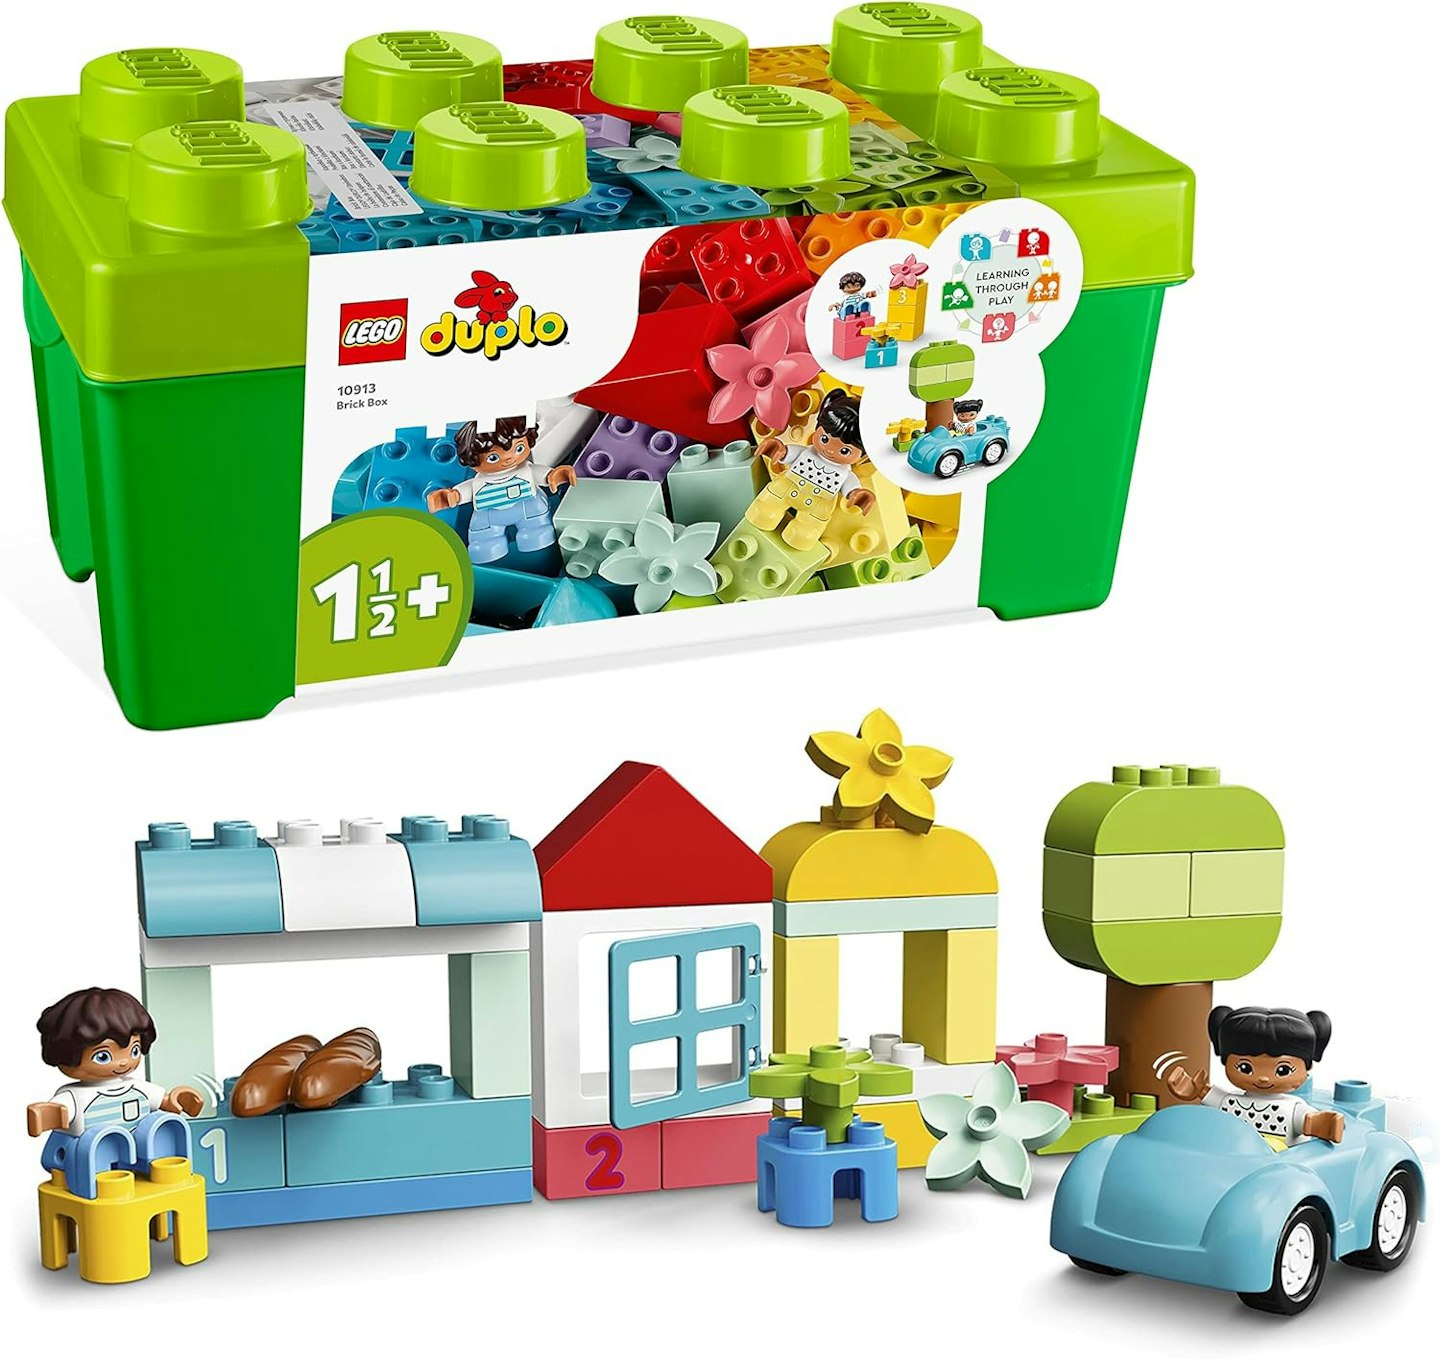 LEGO DUPLO classic brick box building set